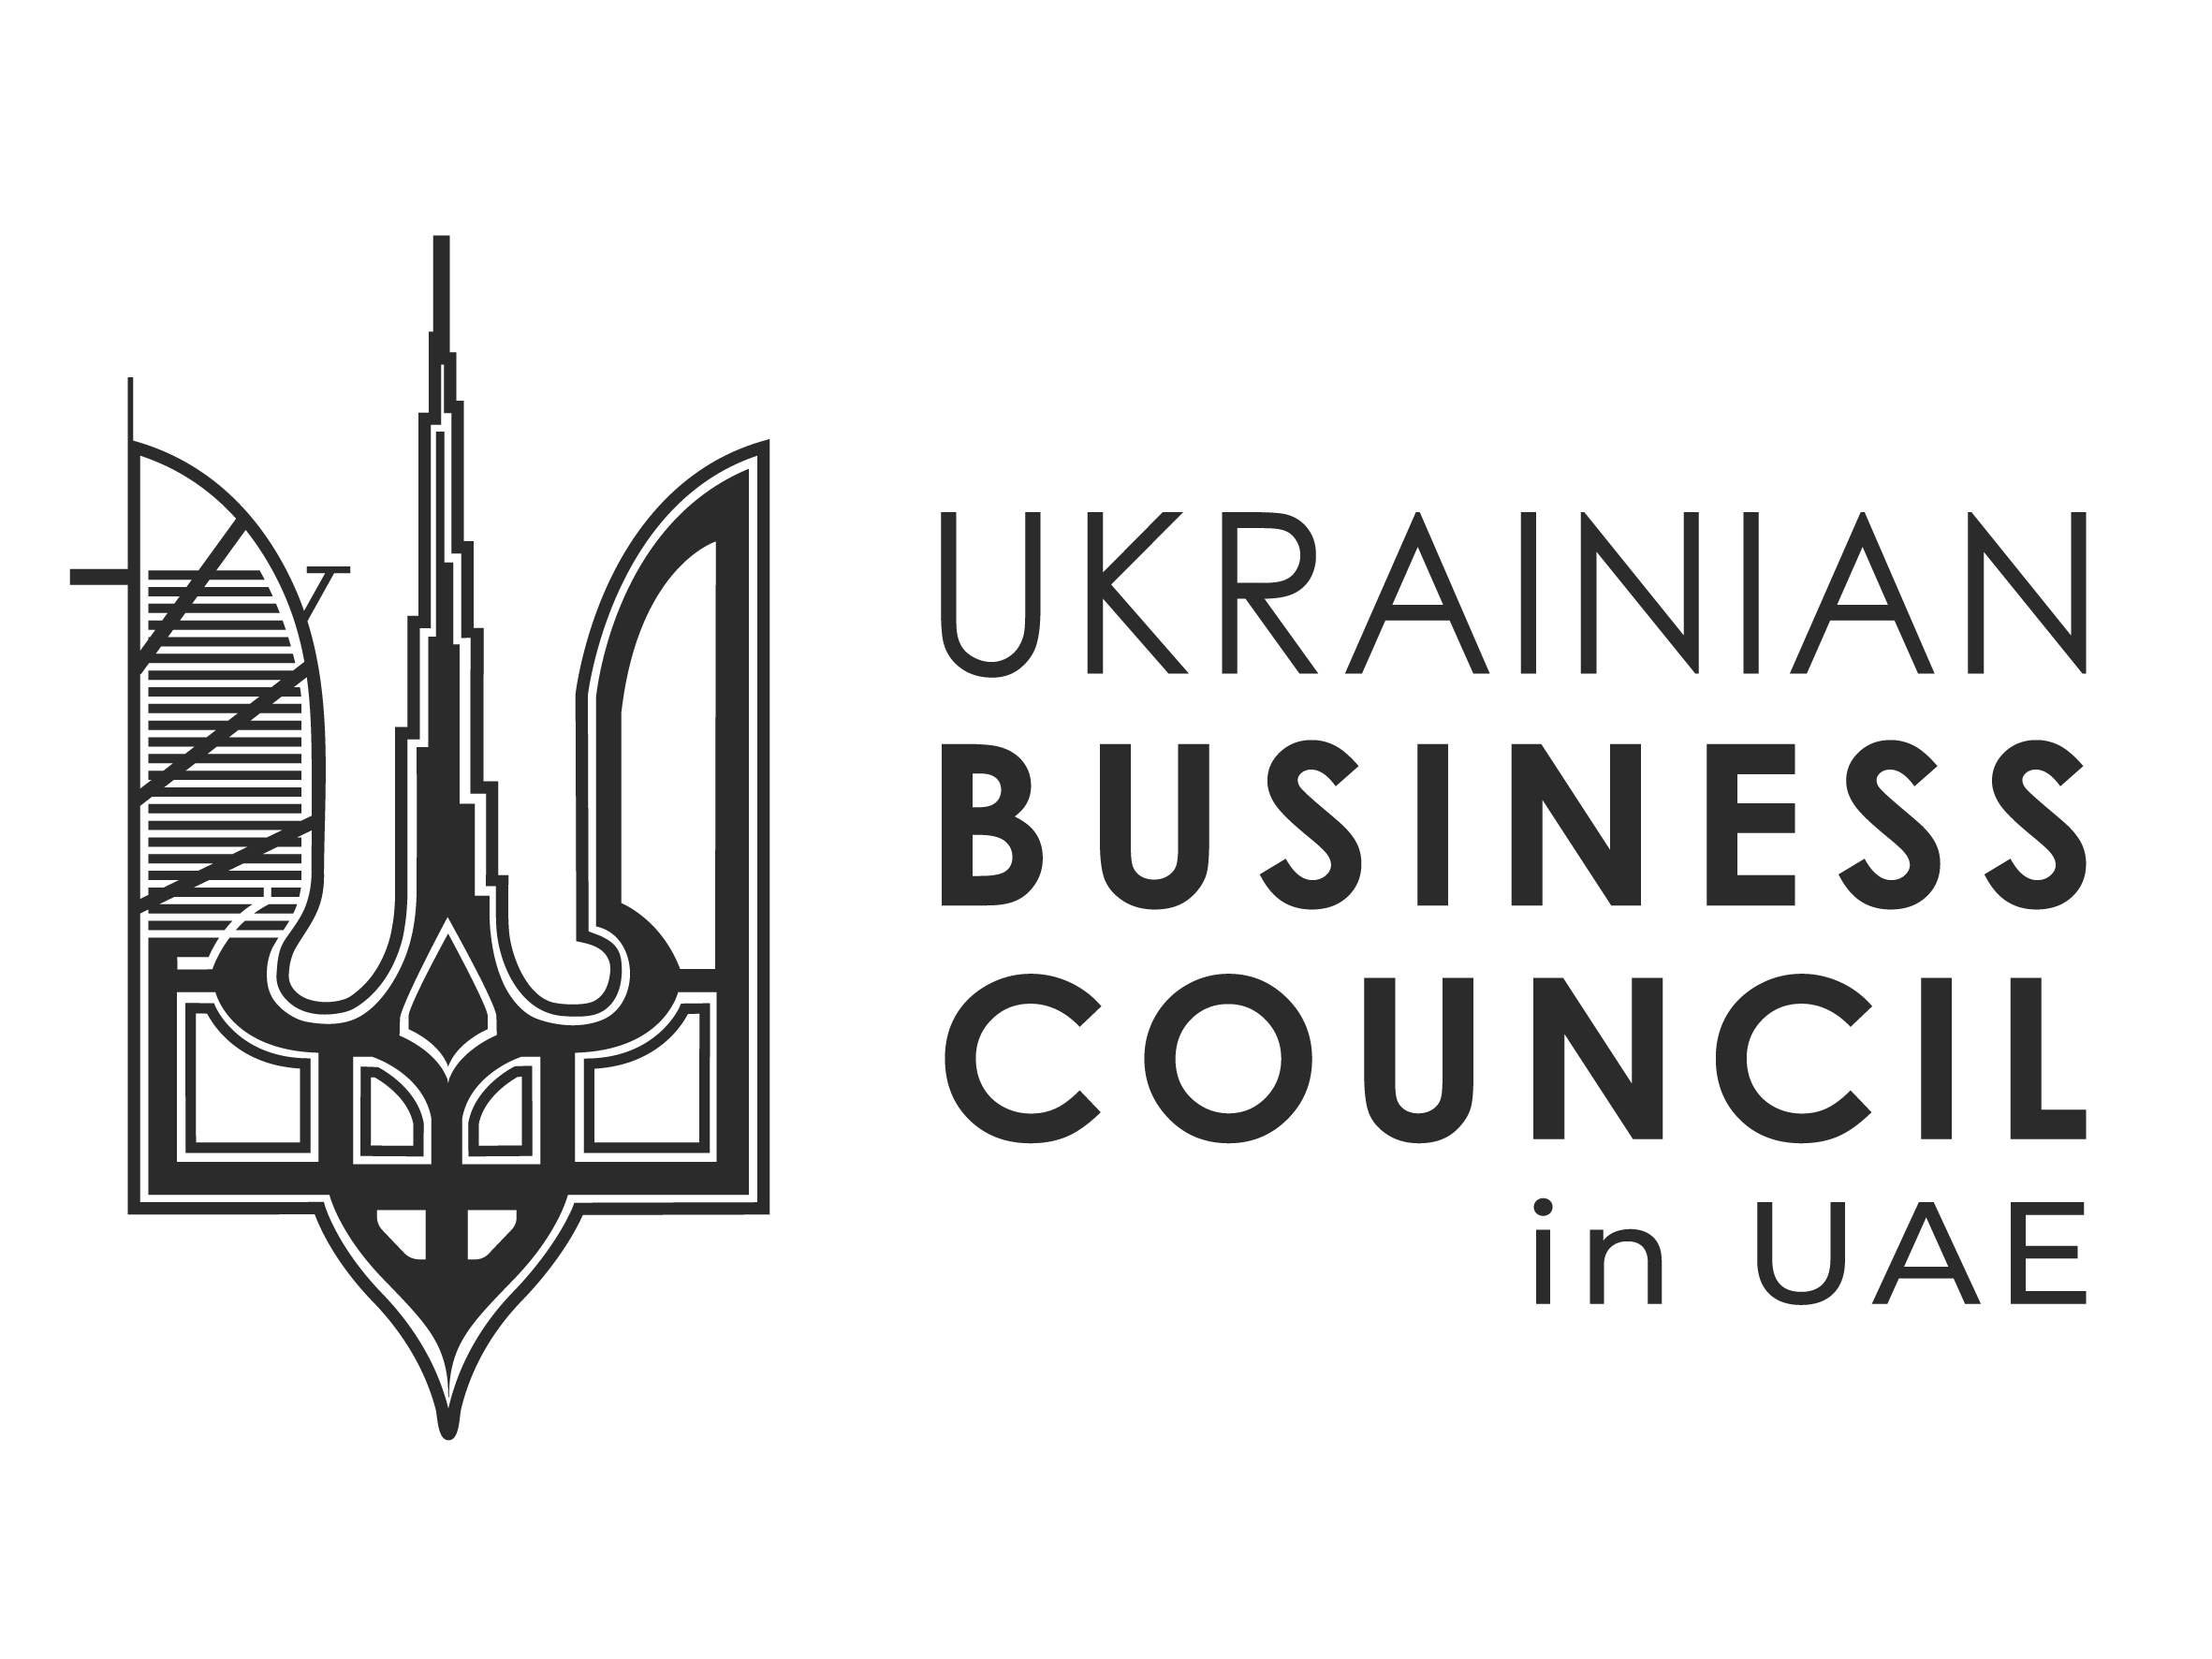 logo-ubc